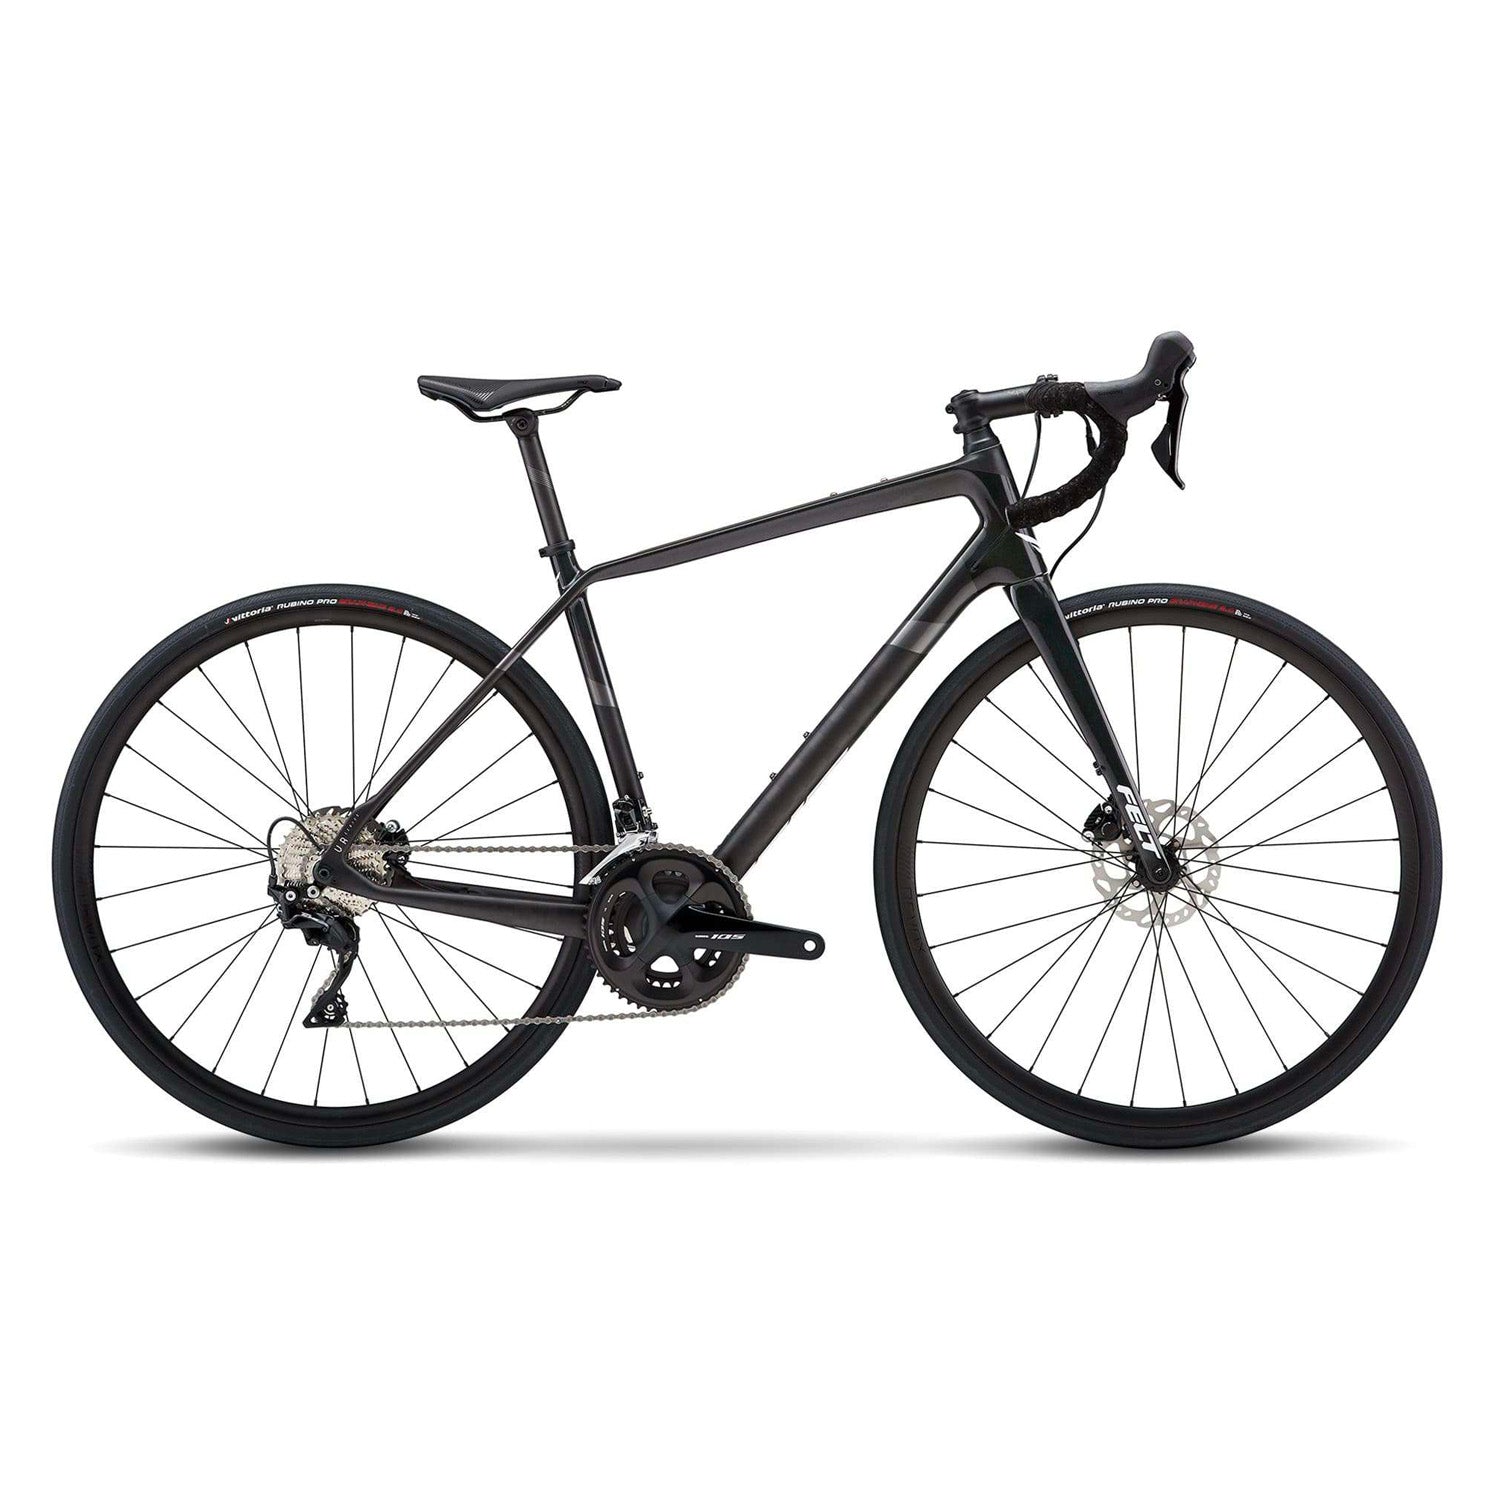 Felt 2022 Advanced 105 Road Bike - 47cm black glitter color, buy from Bixby Bicycles, Oklahoma